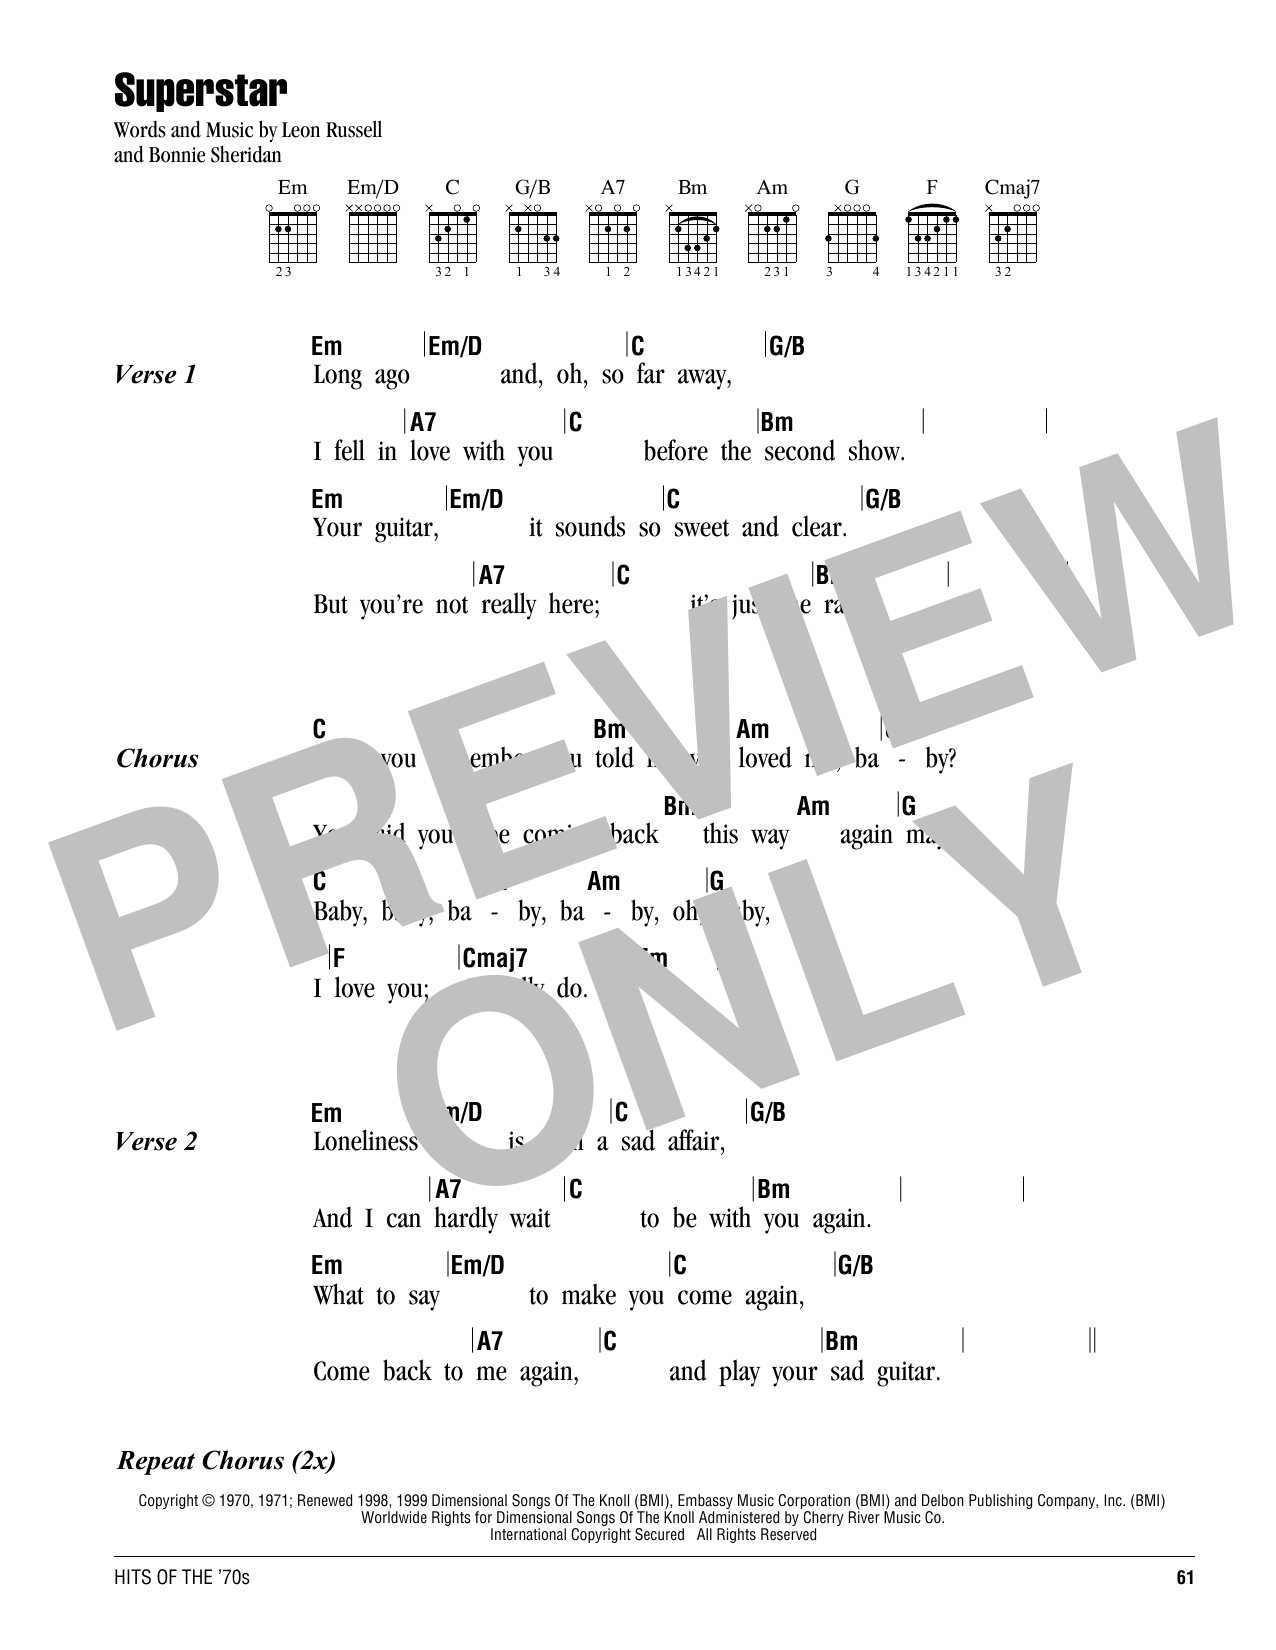 Carpenters Superstar Sheet Music Notes & Chords for Lyrics & Chords - Download or Print PDF